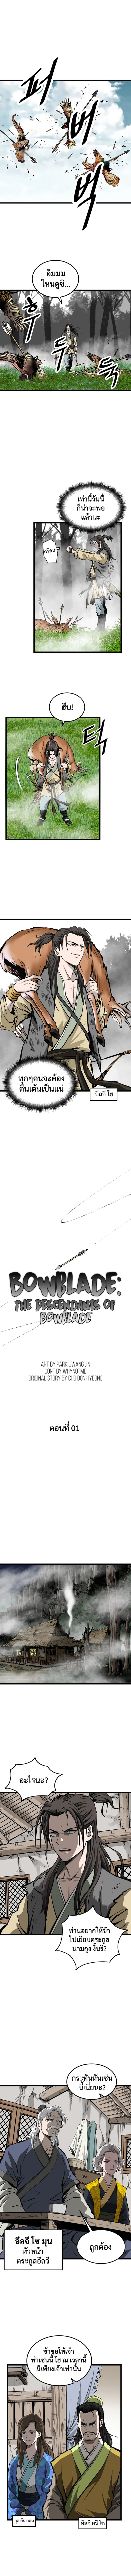 Bowblade (The Descendants of Bowblade) 1 (2)